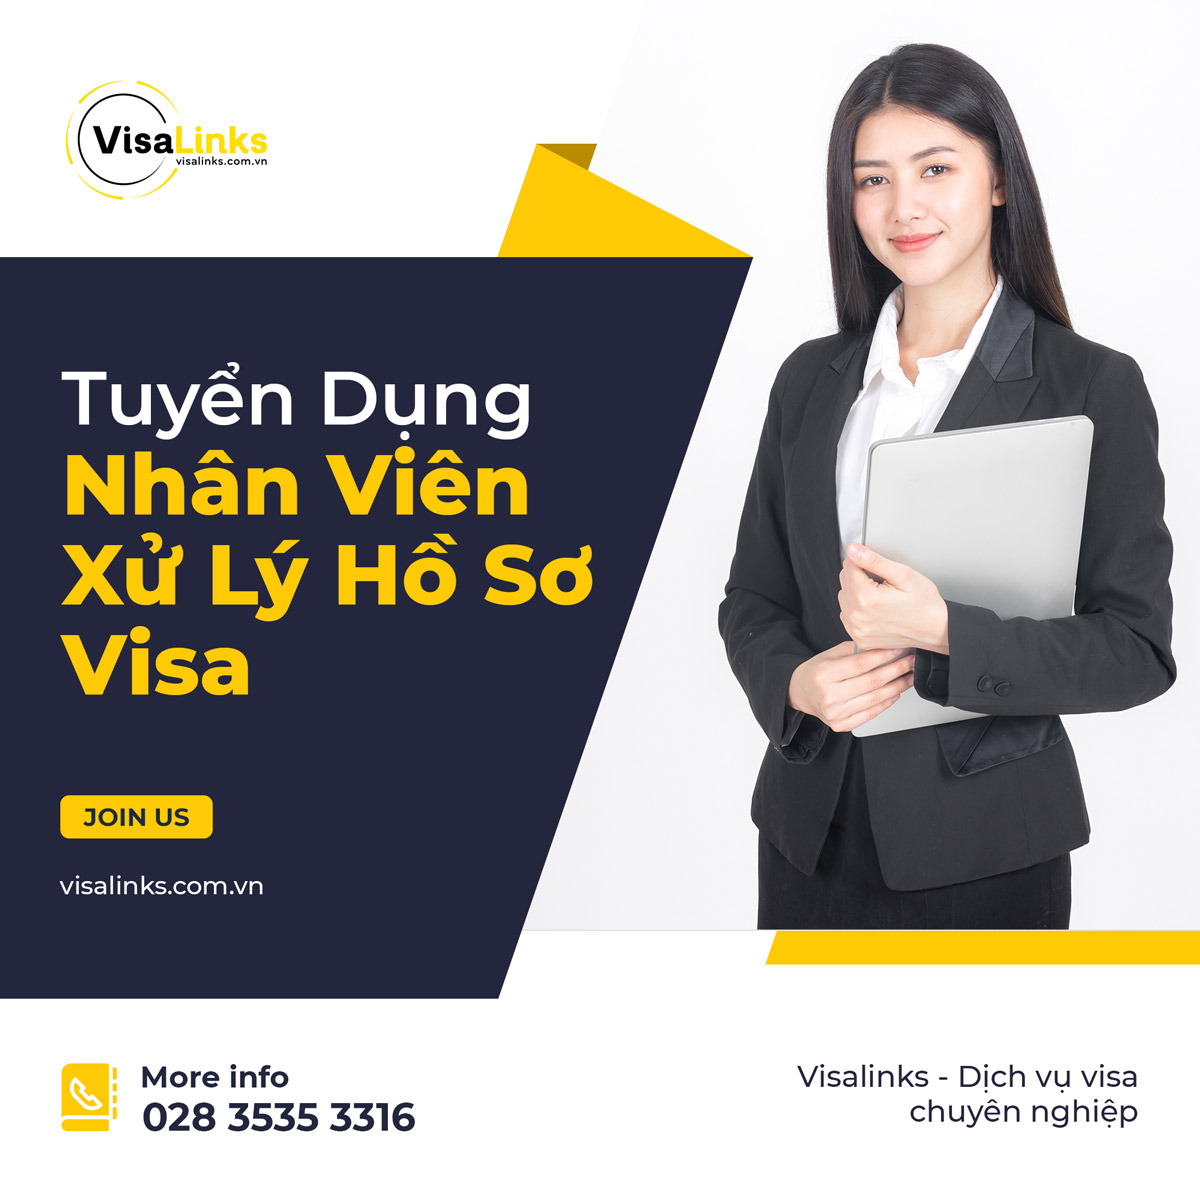 visalinks tuyển dụng